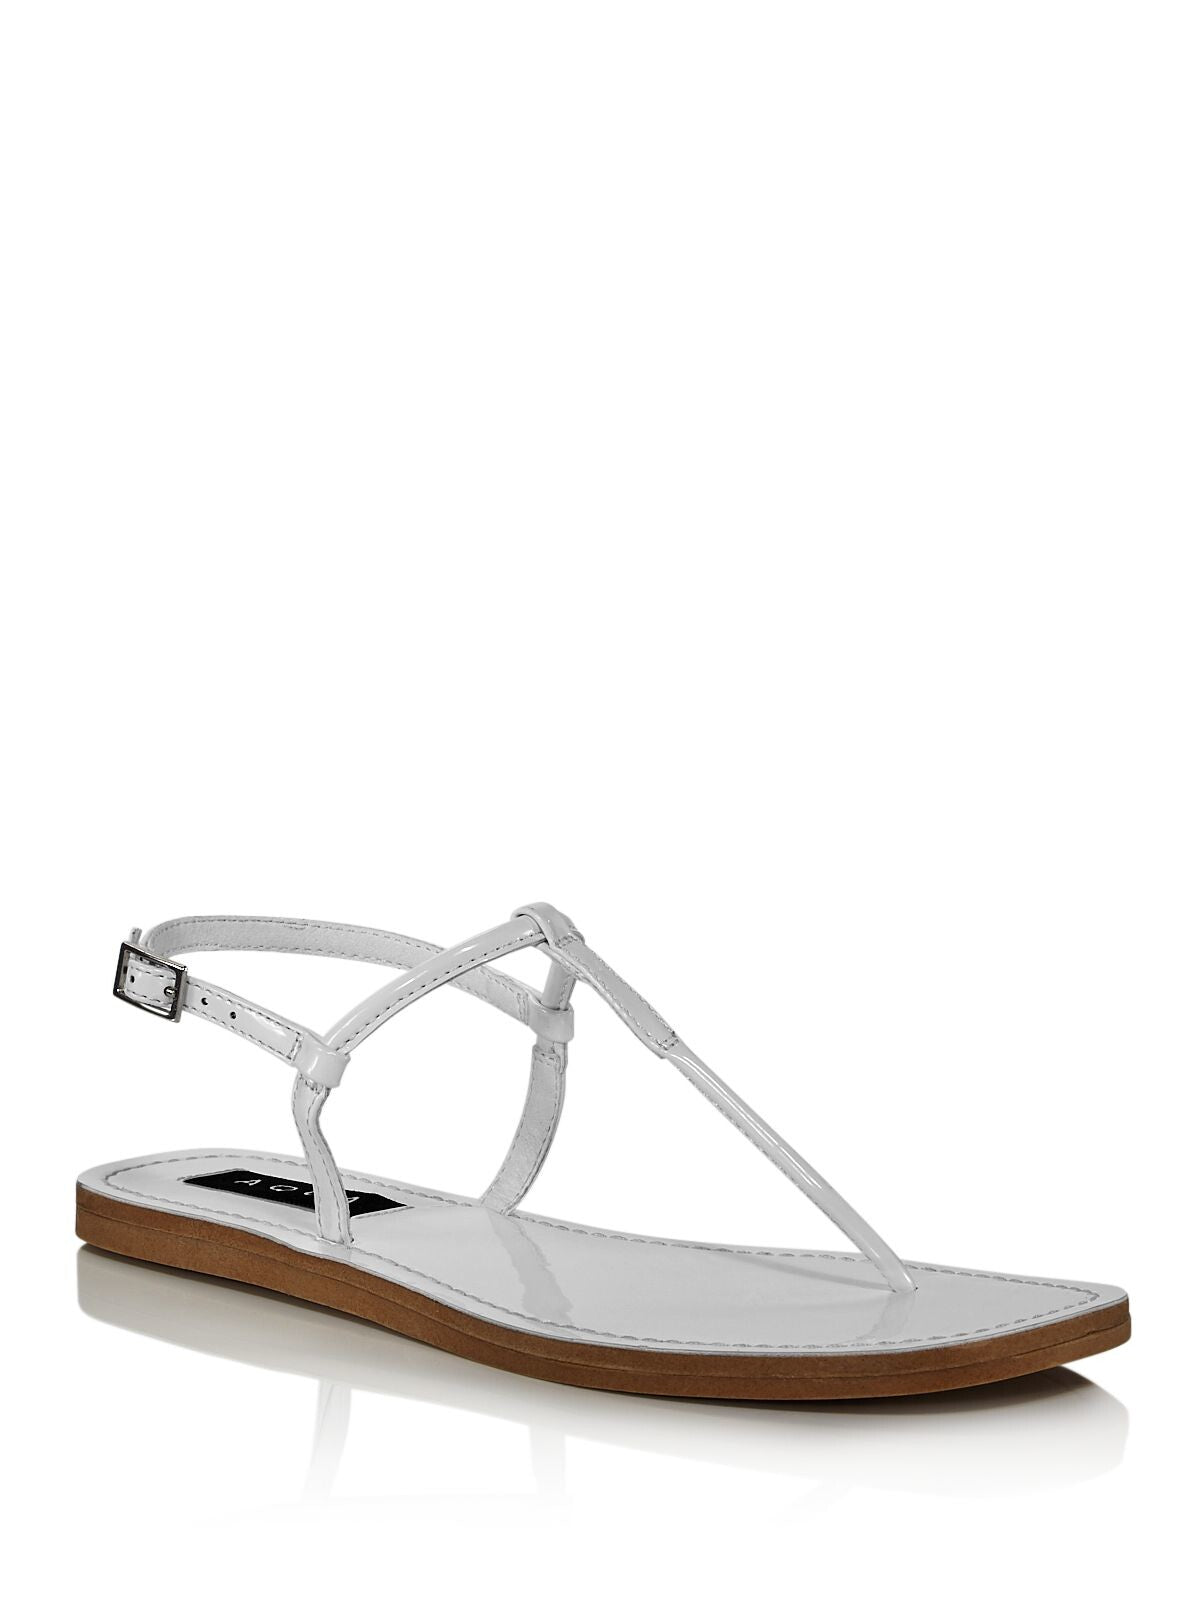 AQUA Womens White T-Strap Zen Round Toe Buckle Thong Sandals Shoes 5 M